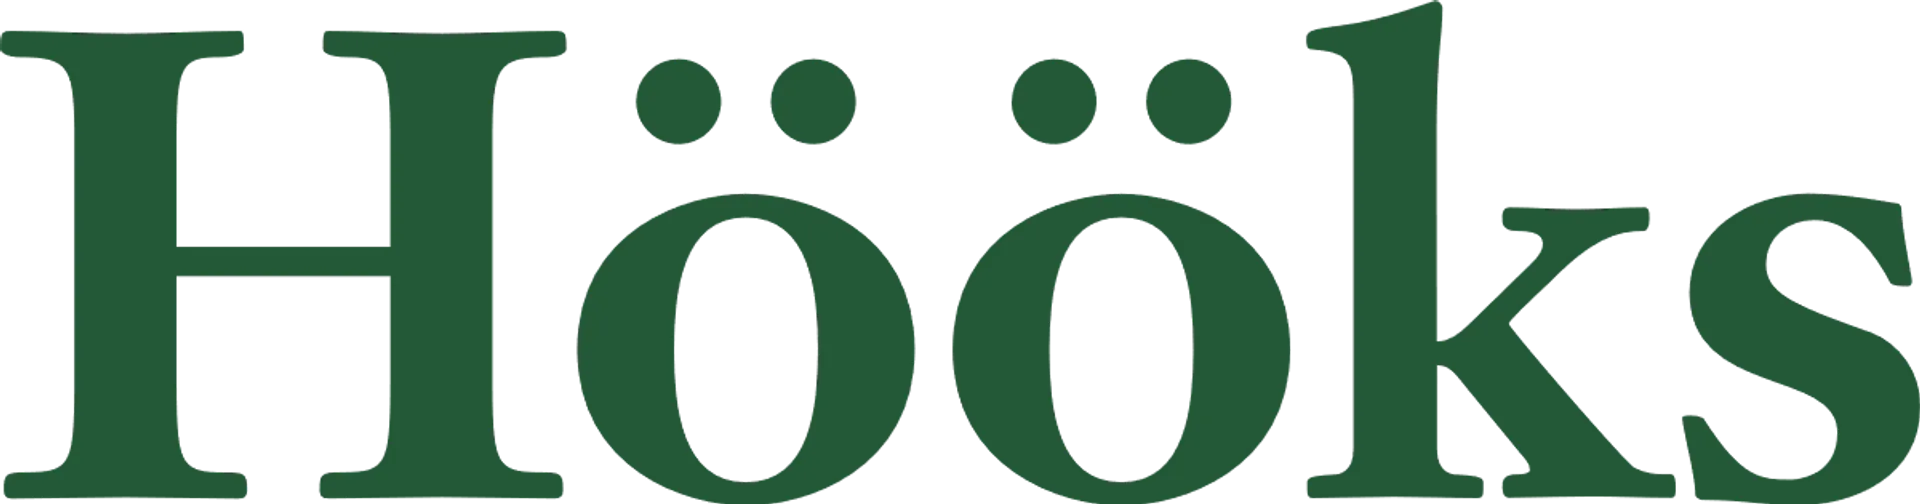 HÖÖKS logo